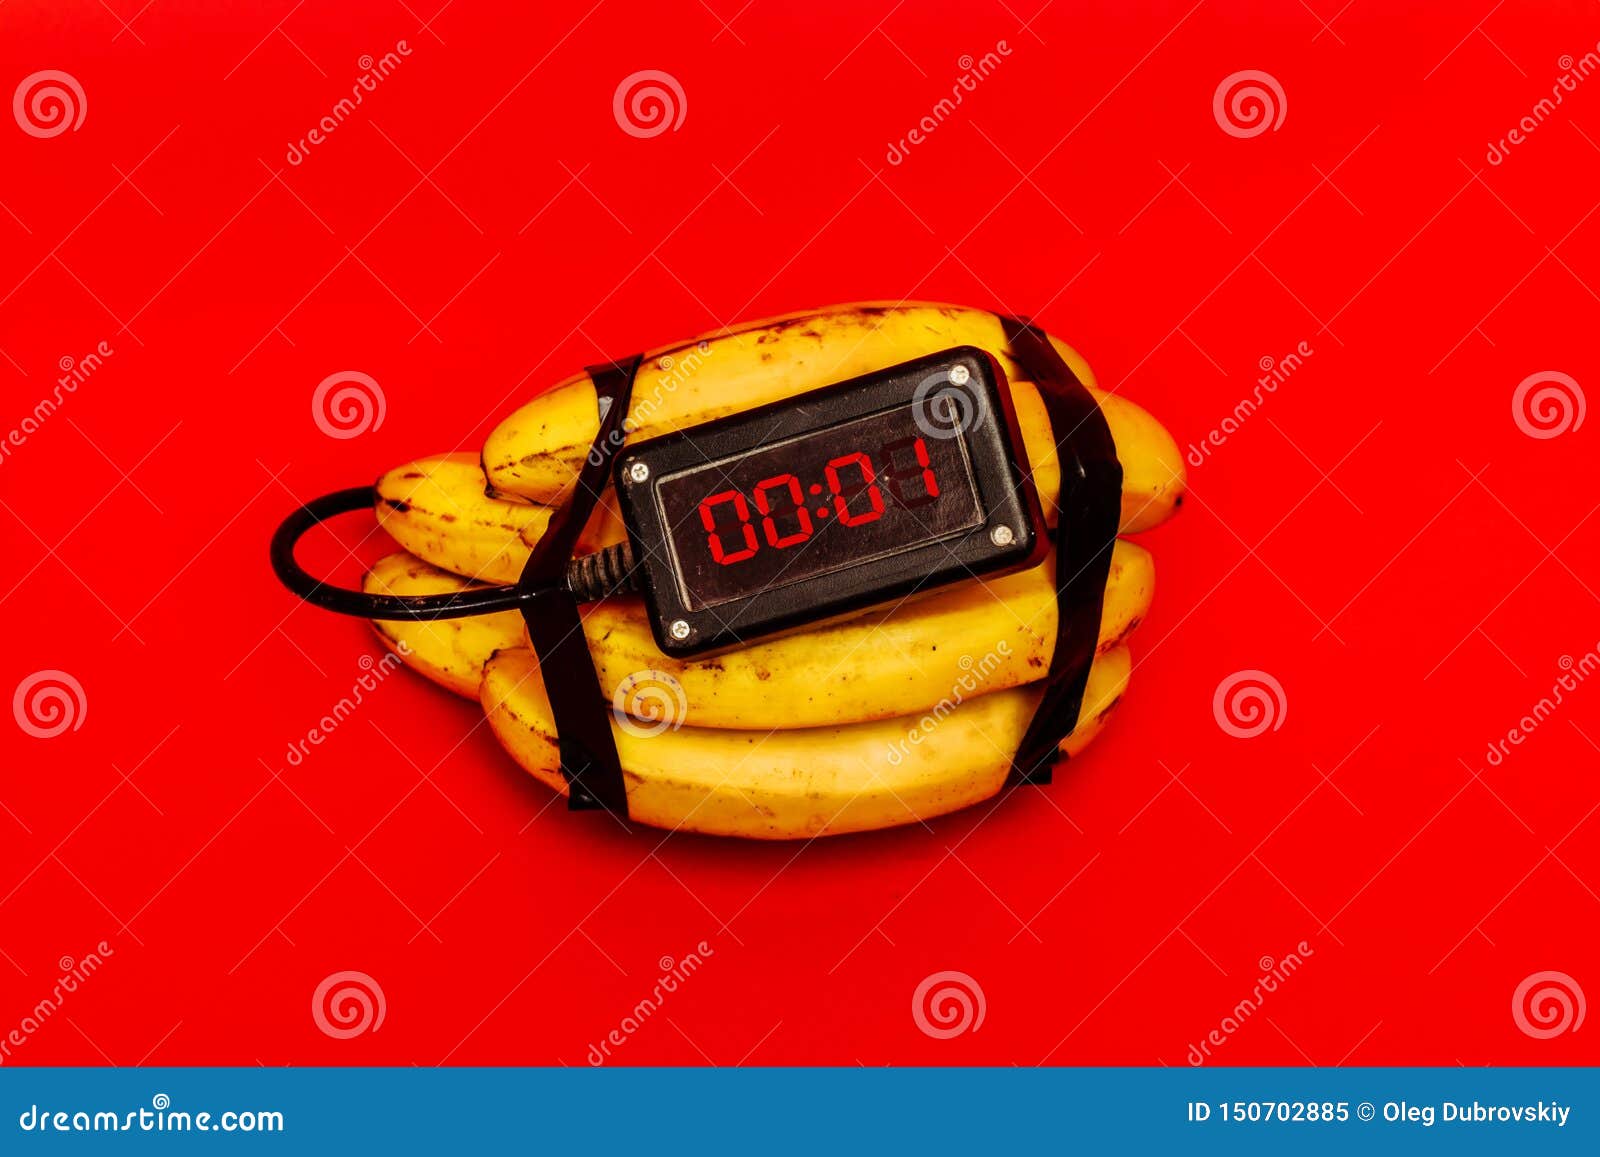 Fake Bomb Made Of Banana Before Explosion Stock Image